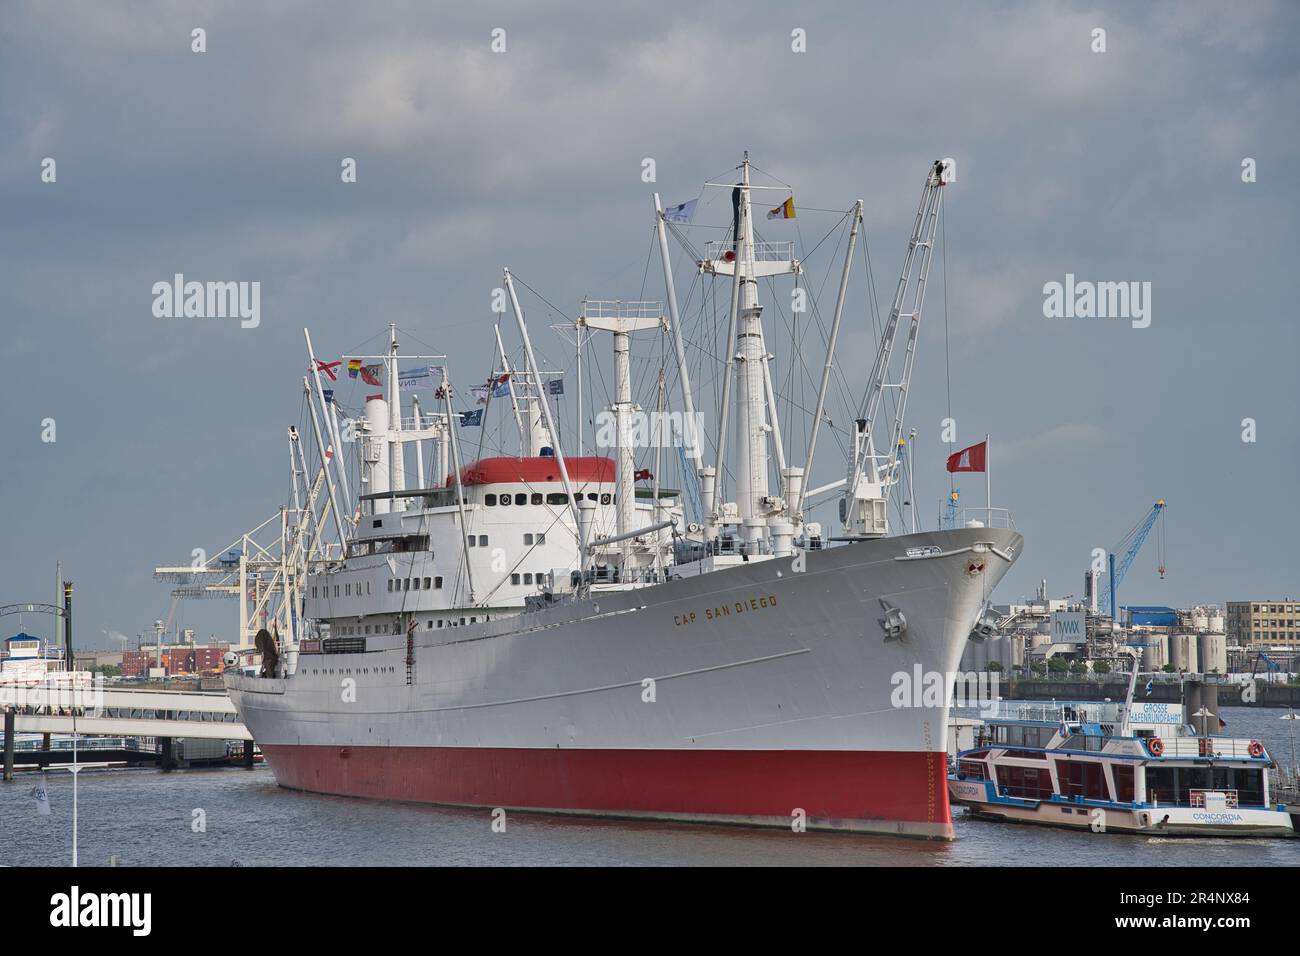 Hamburg, Hansestadt, Norddeutschland, Waterkant, Schiff, ship, Fluss, river, Cap San Diego, Hafen, harbour, Elbe, Stock Photo